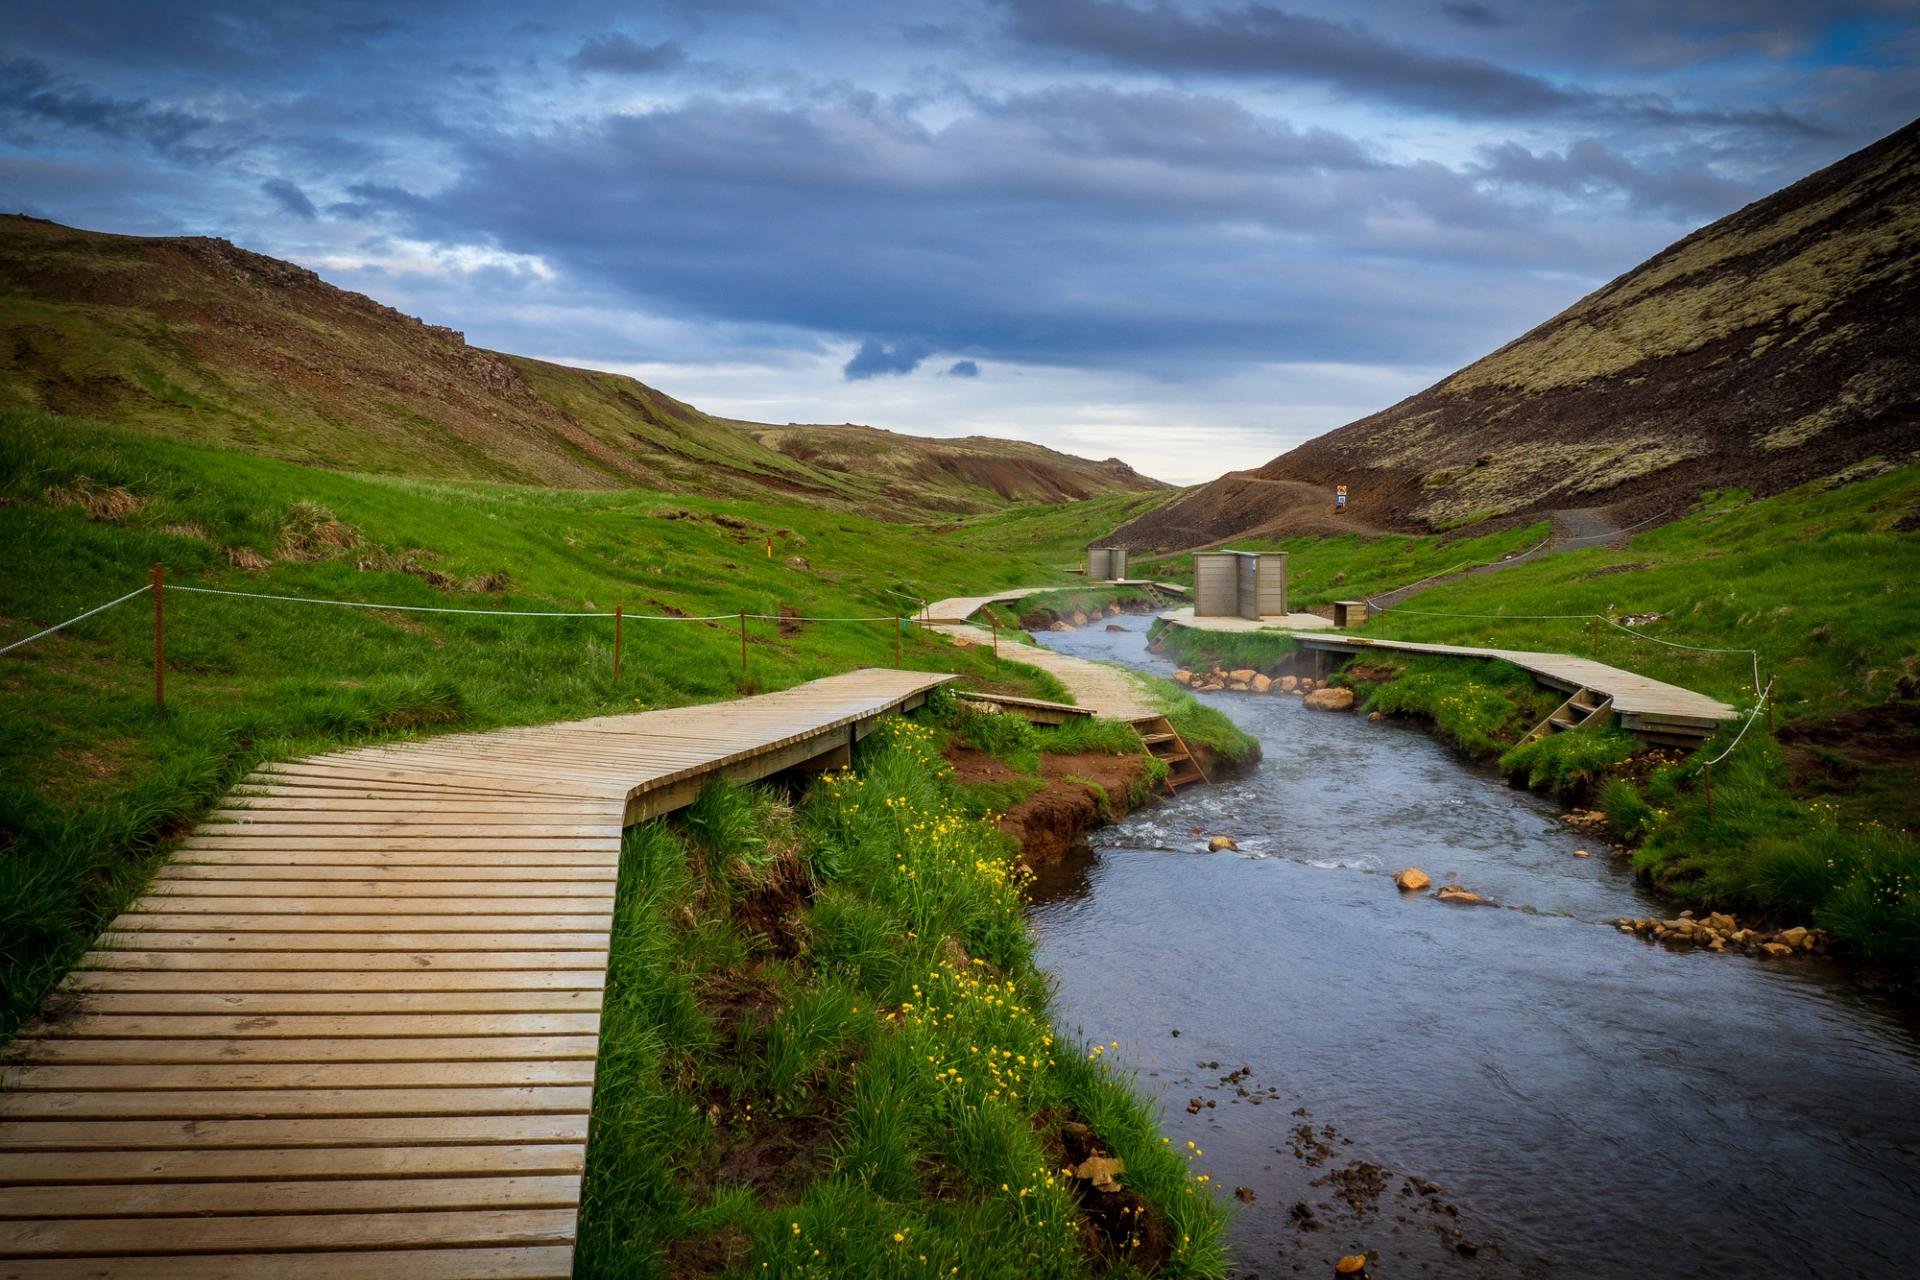 Reykjadalur hot spring, thermal river and its green landscape